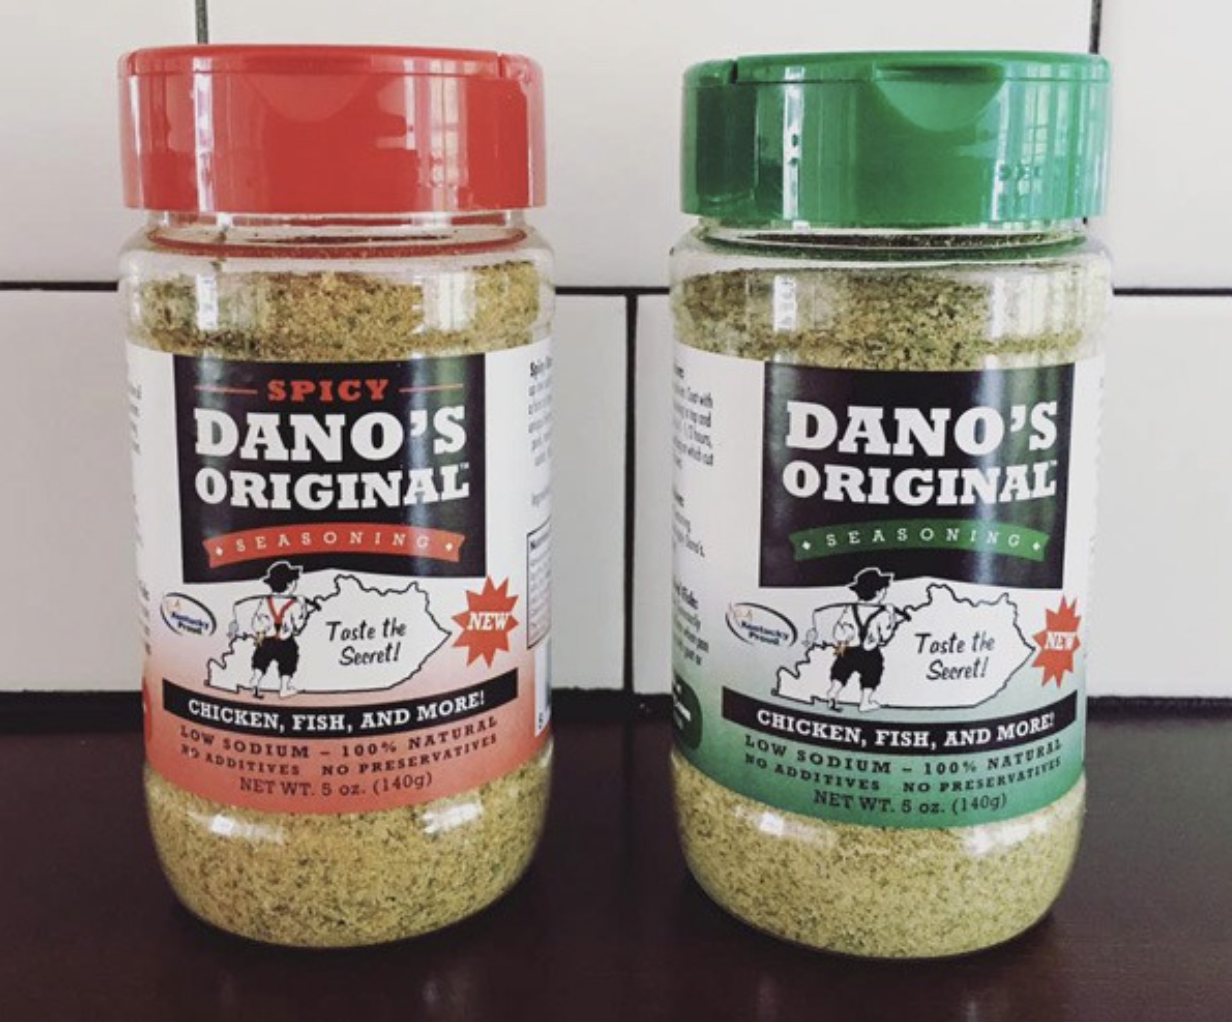 Dan-O's Seasoning 3.5 oz Starter Pack